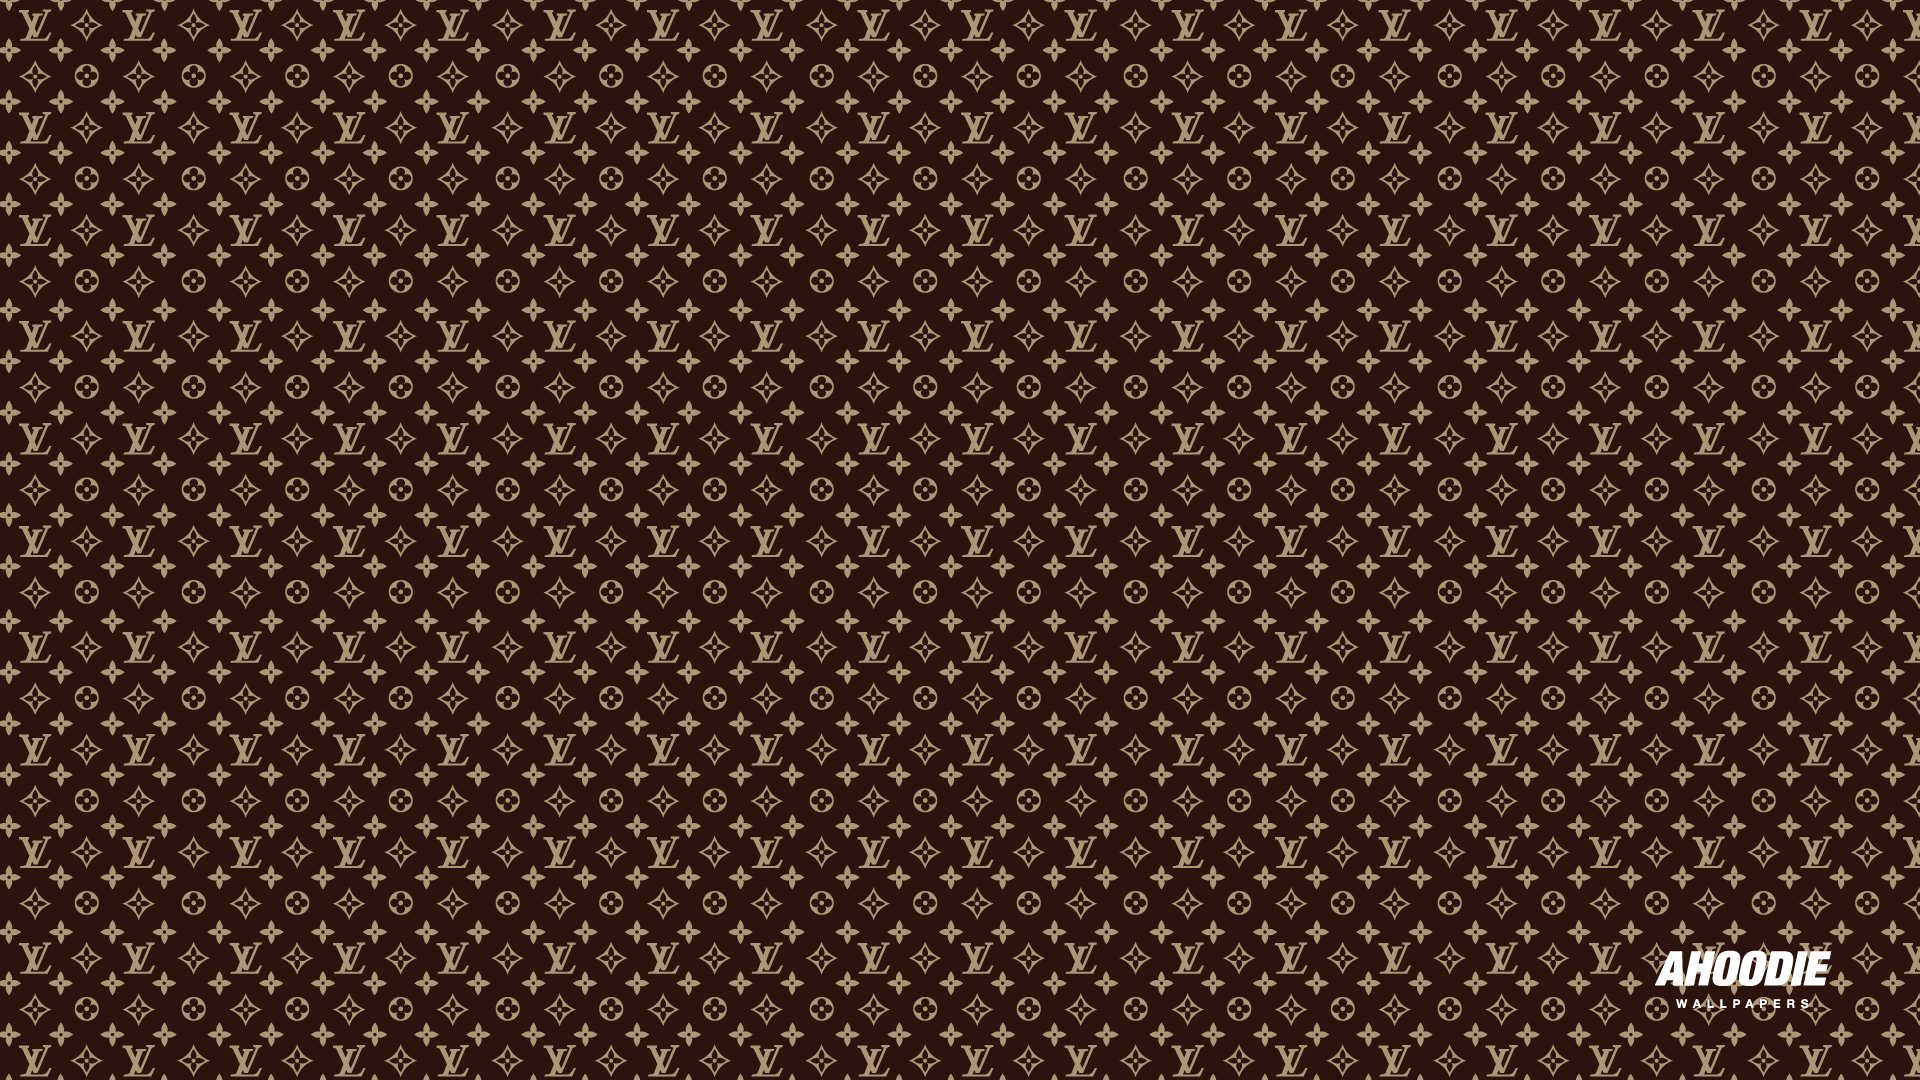 Hd Wallpapers Louis Vuitton Desktop 19201080 Wallpaper 19201080 1920x1080